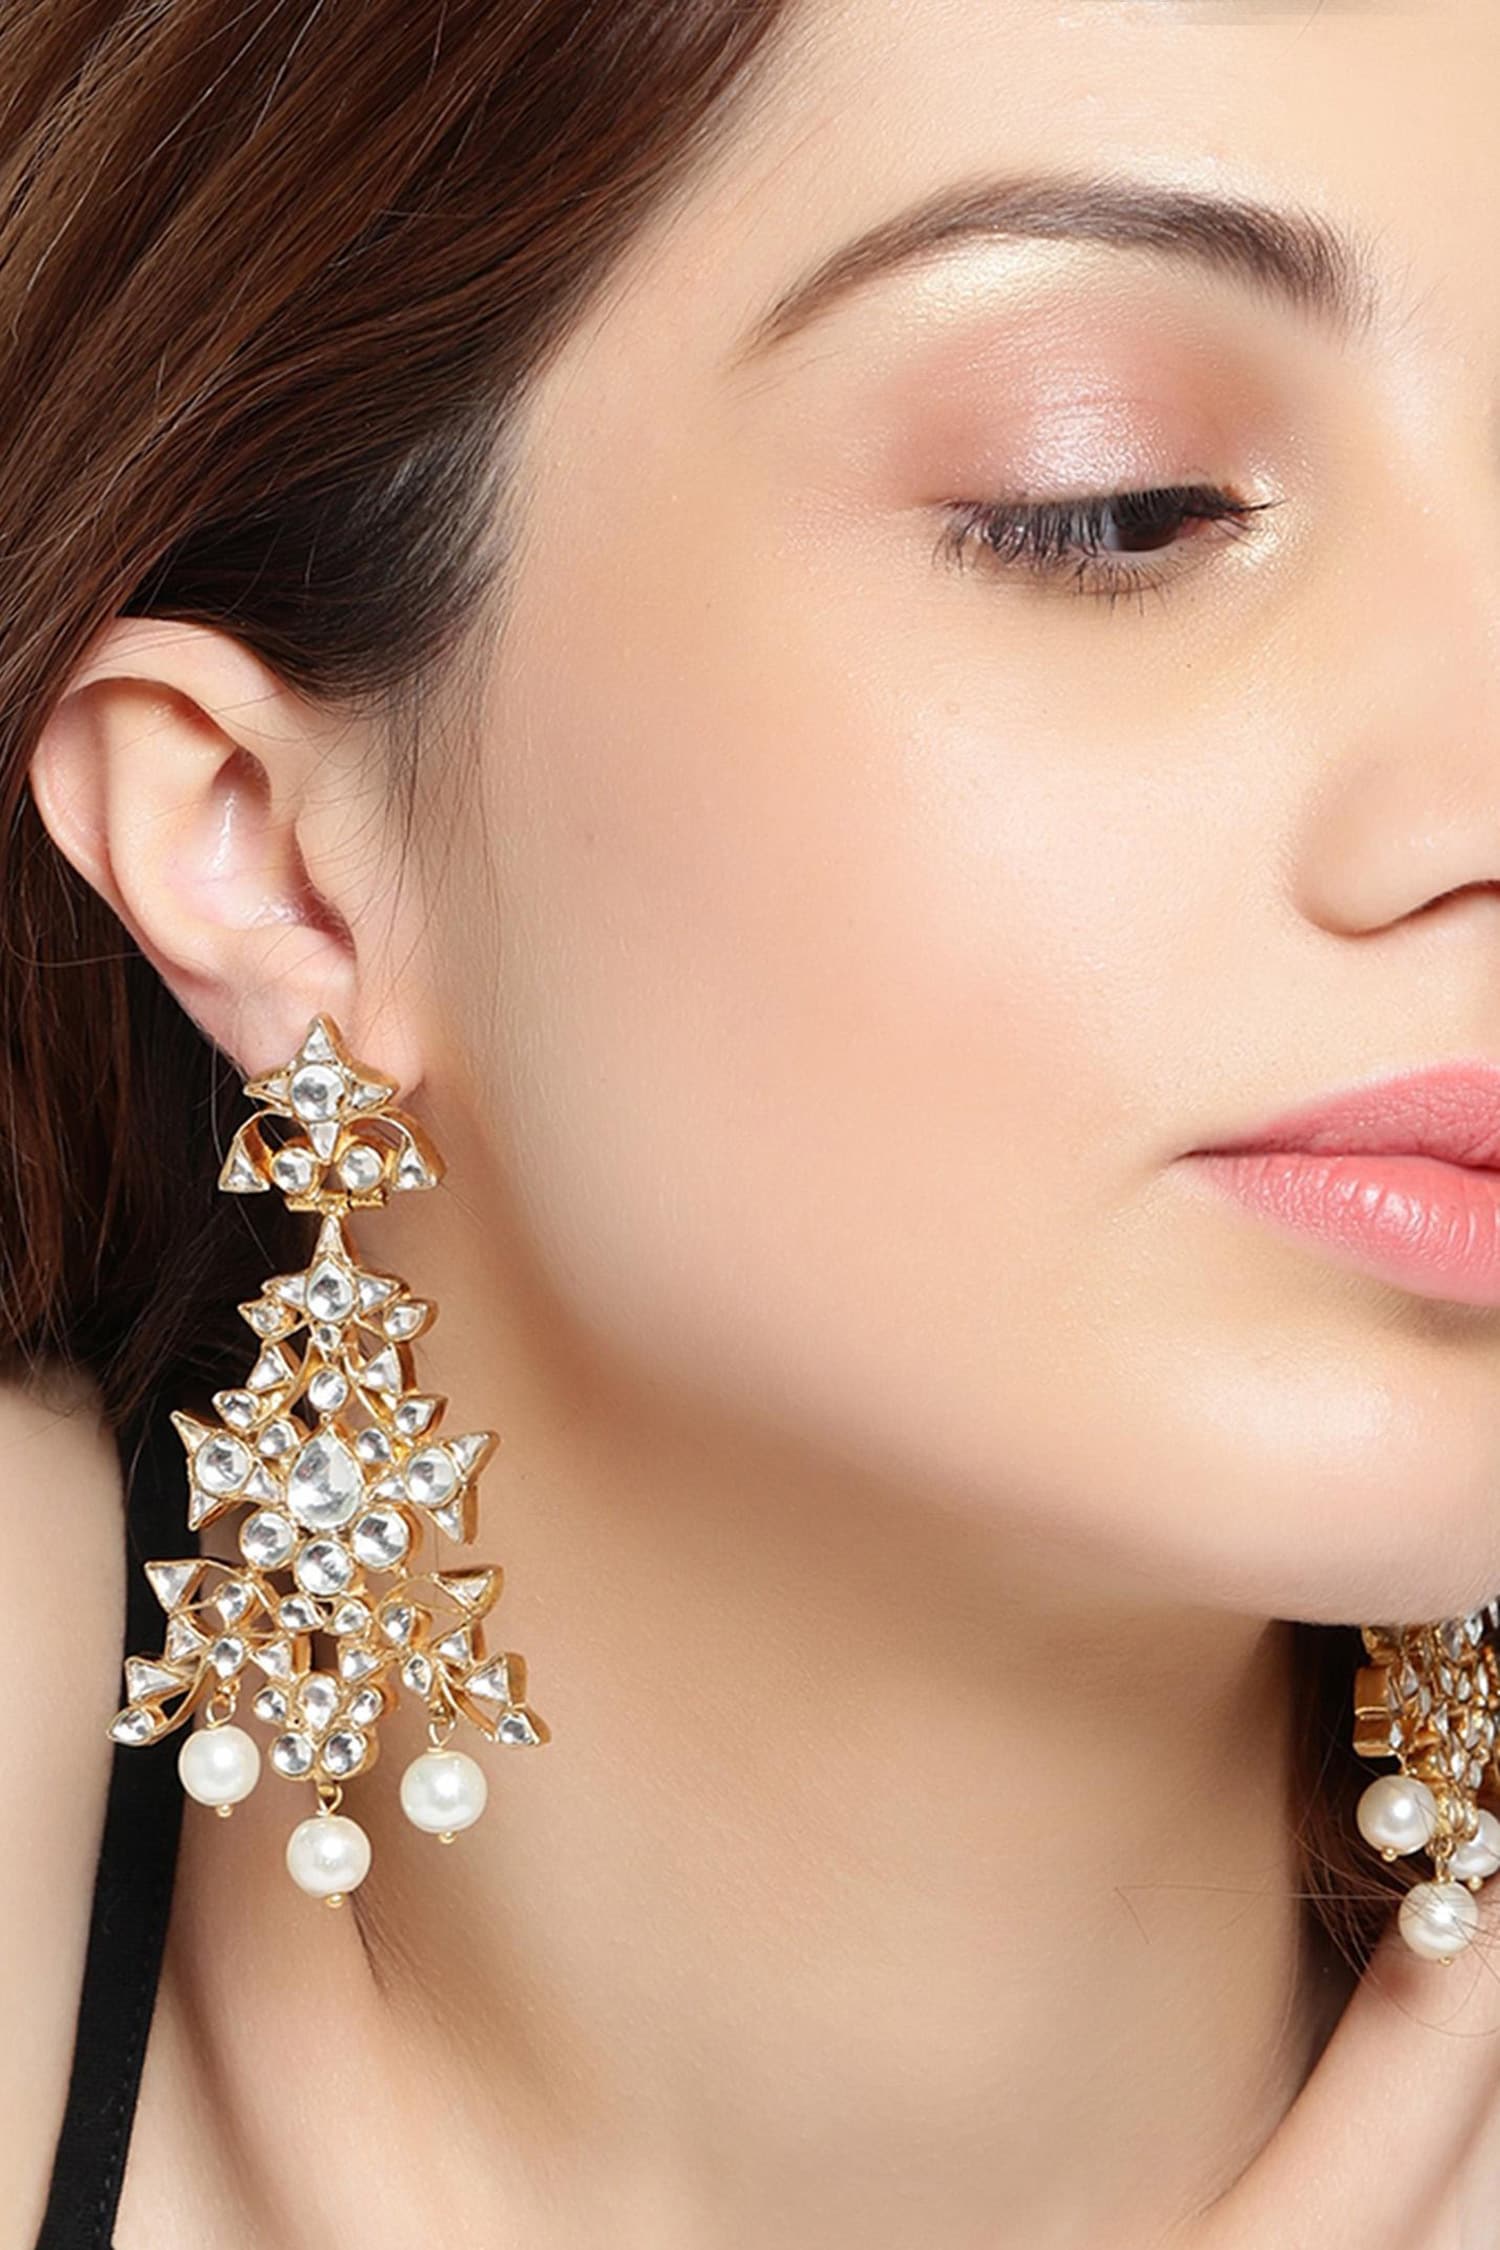 Earrings  Alloy gold plated crystal stone earrings